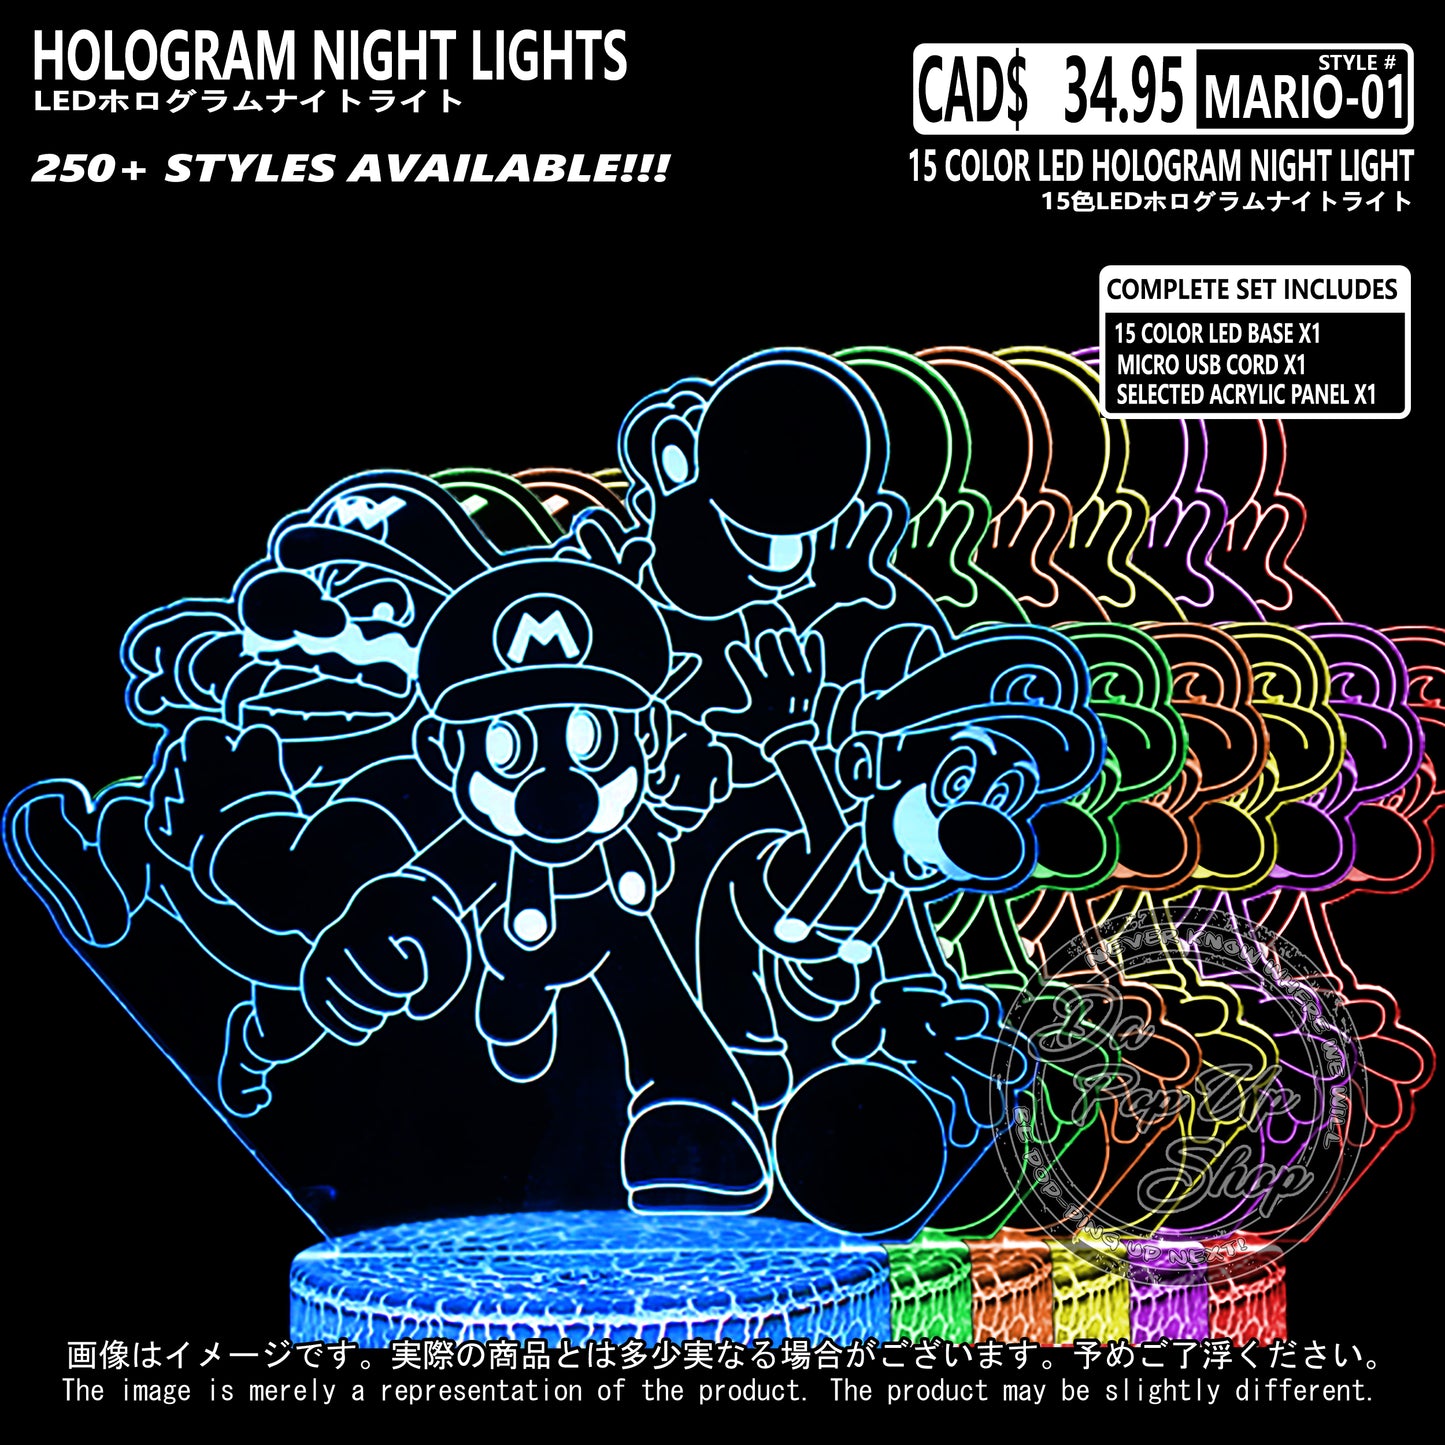 (MARIO-01) Super Mario Bros. Hologram LED Night Light